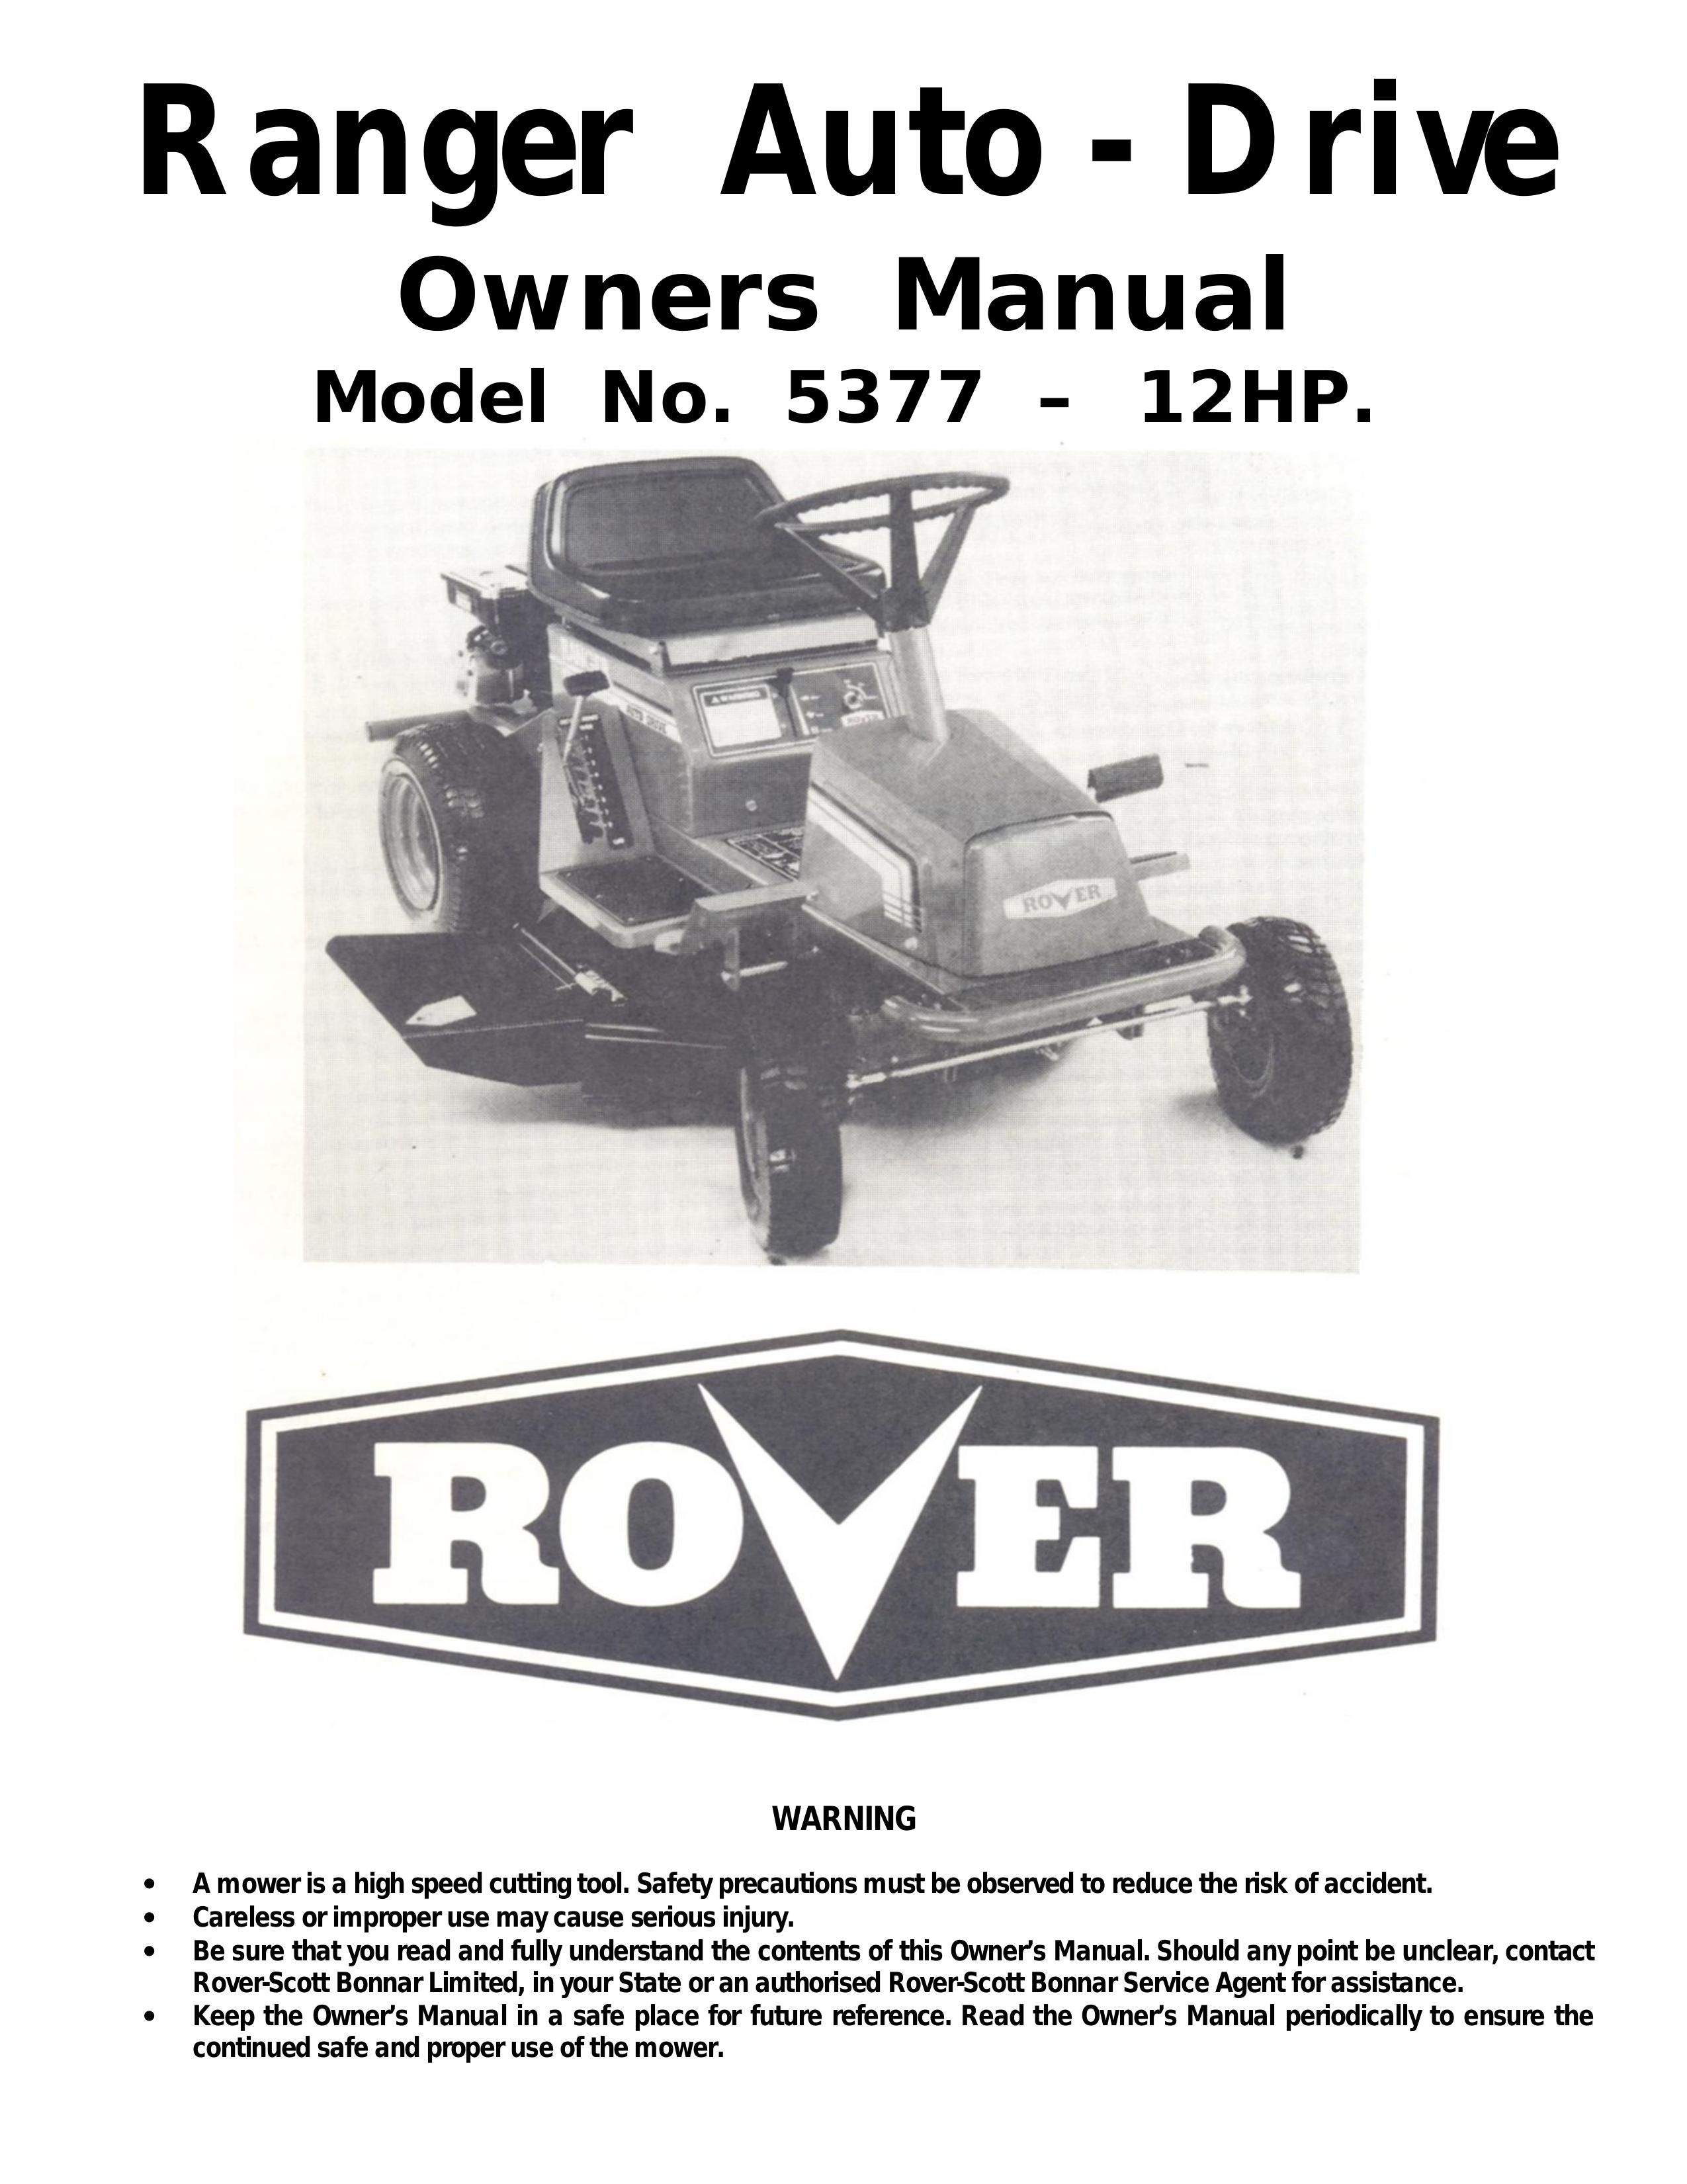 Rover 5377 - 12HP Lawn Mower User Manual